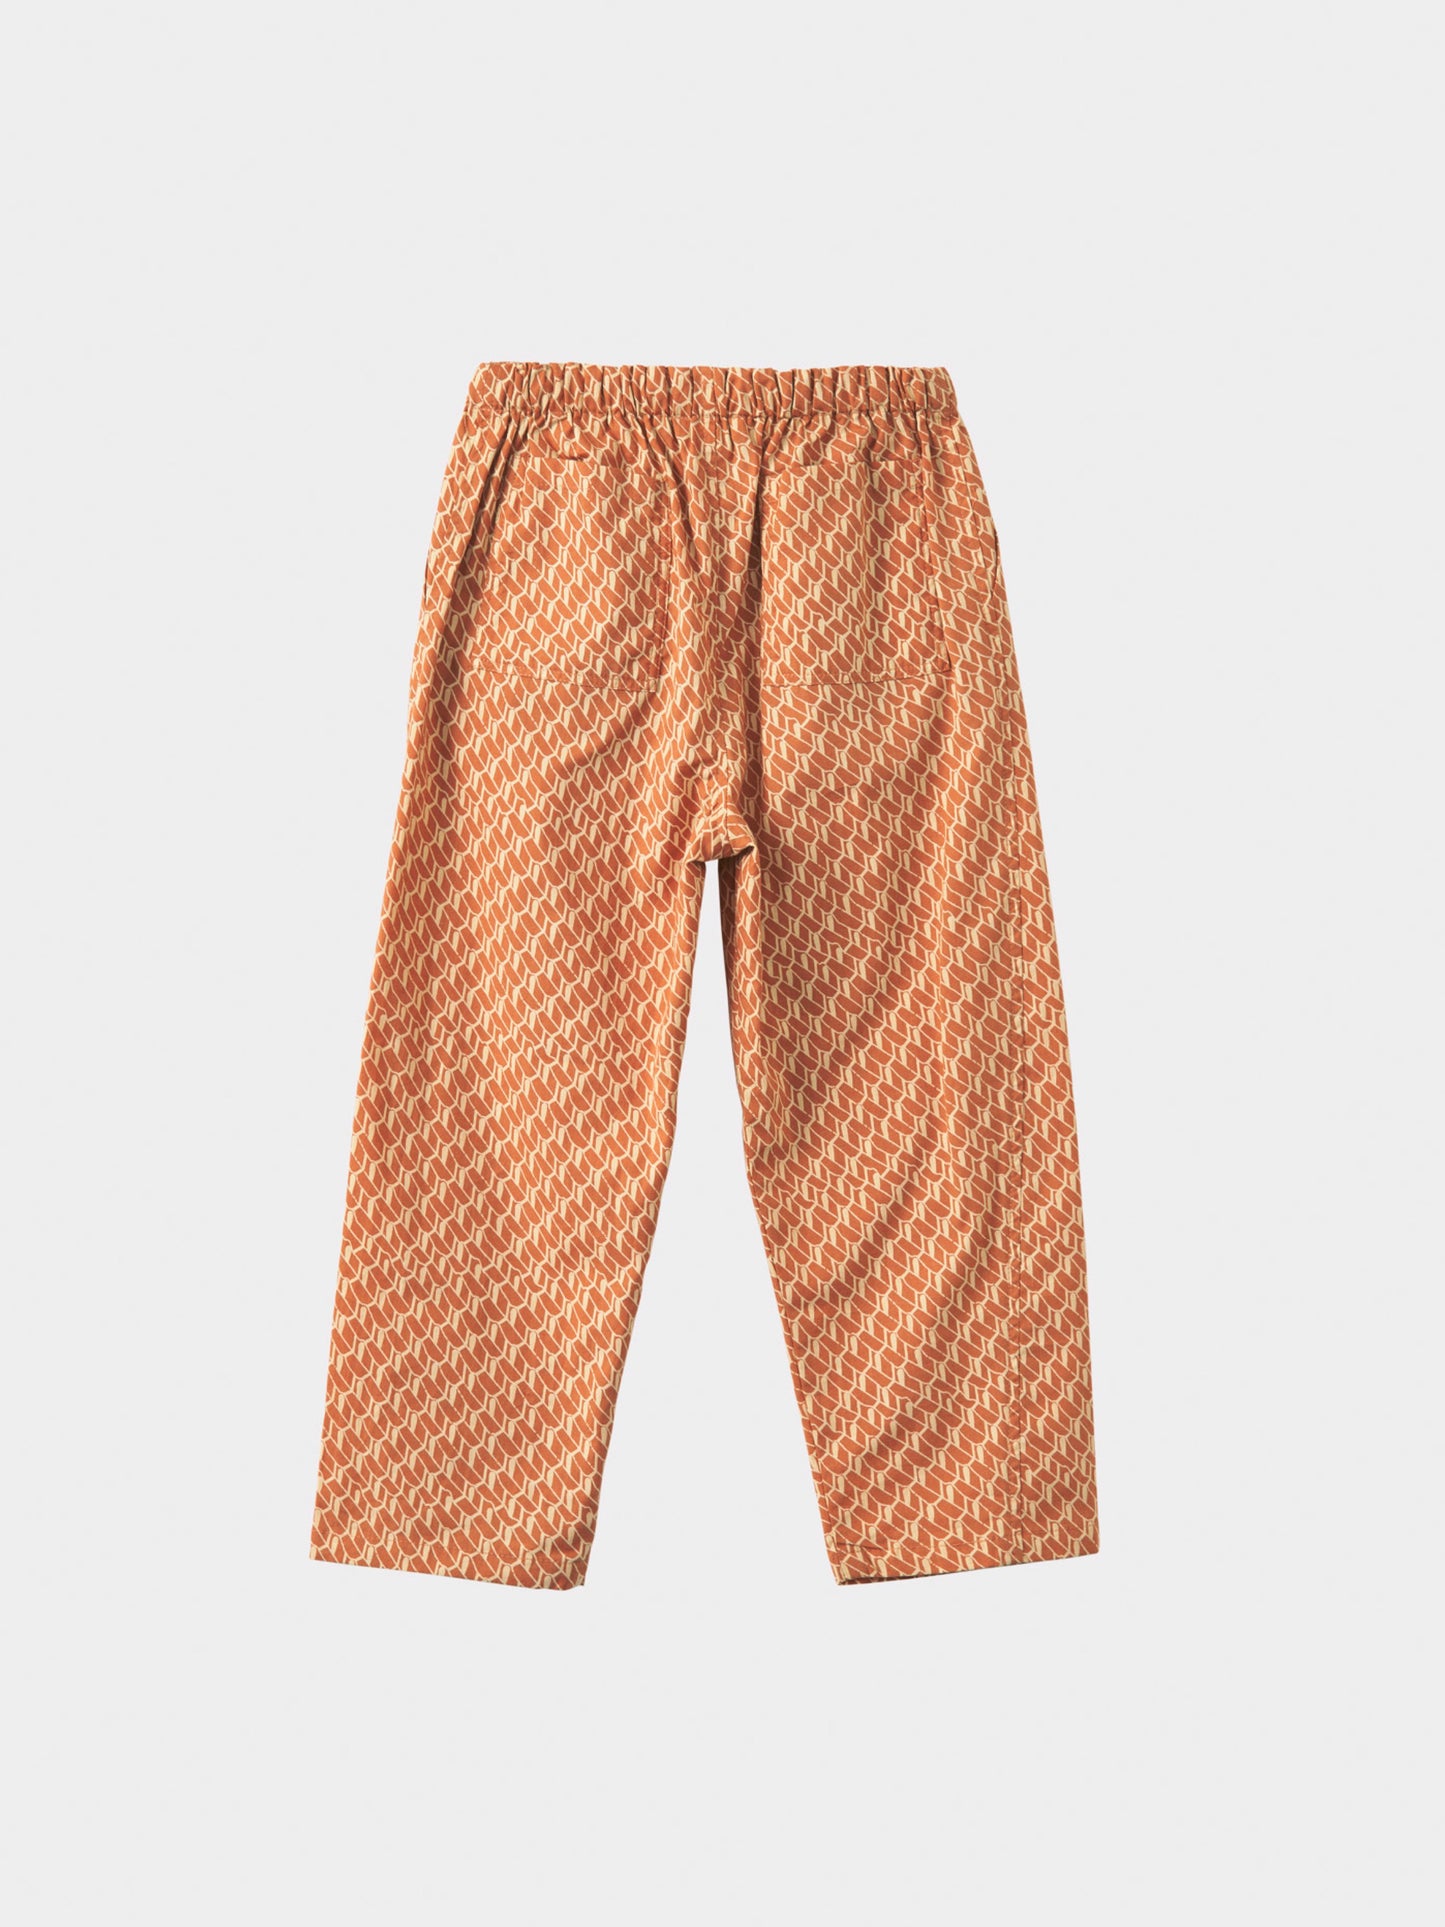 Caramel - Leda Trousers - Apricot geo print